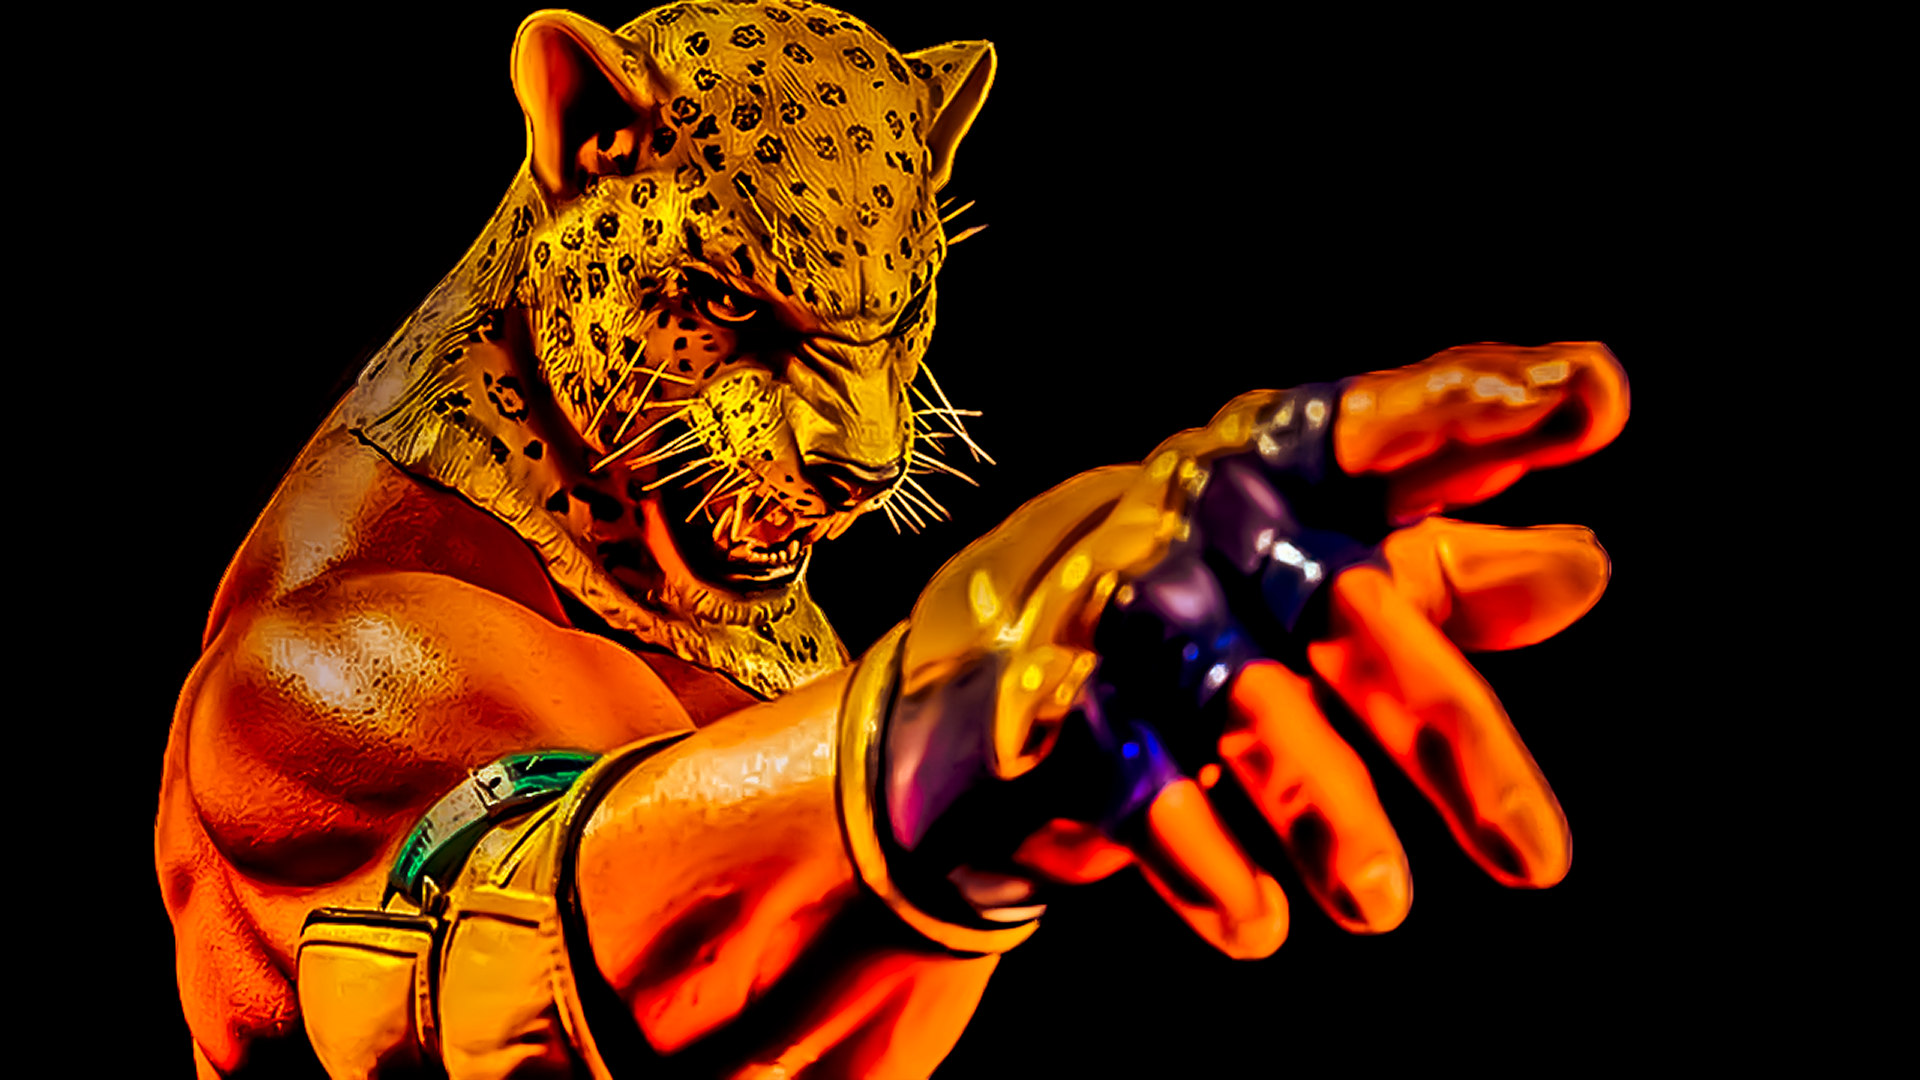 General 1920x1080 Tekken king video games fighting tiger simple background black background mask minimalism muscles gloves fingerless gloves video game characters video game men wrestler